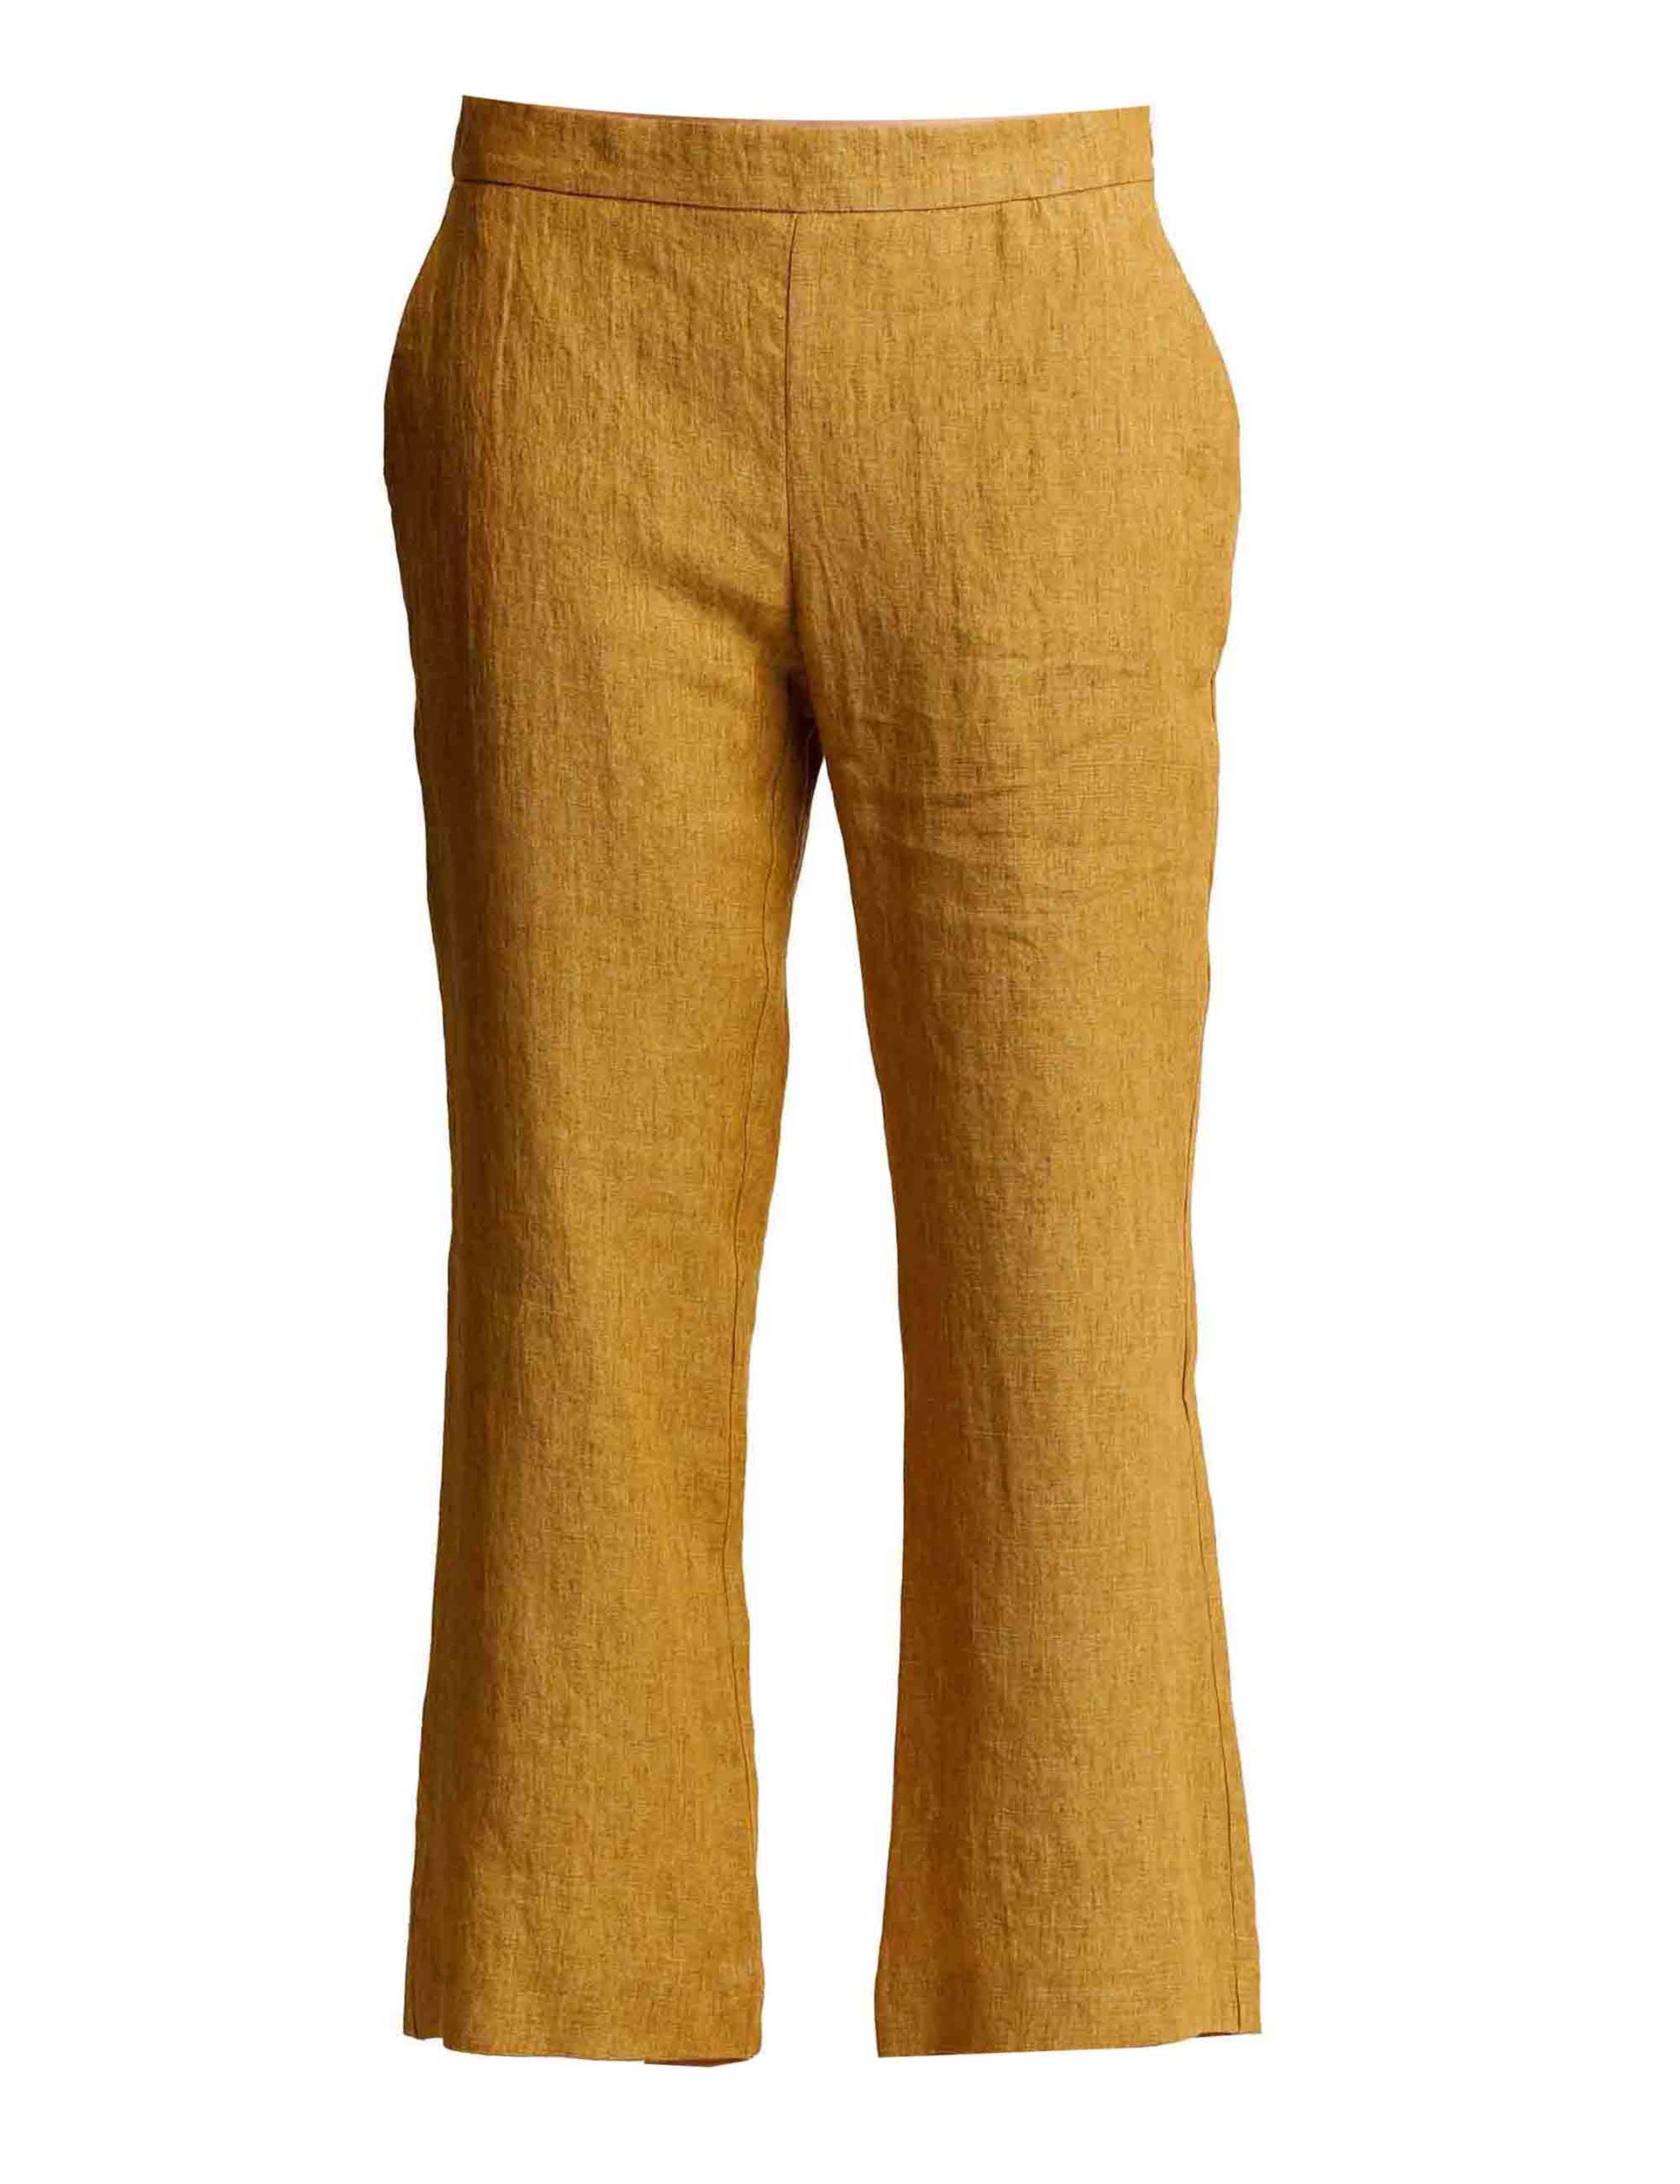 Pantaloni donna Délavé in puro lino mostarda